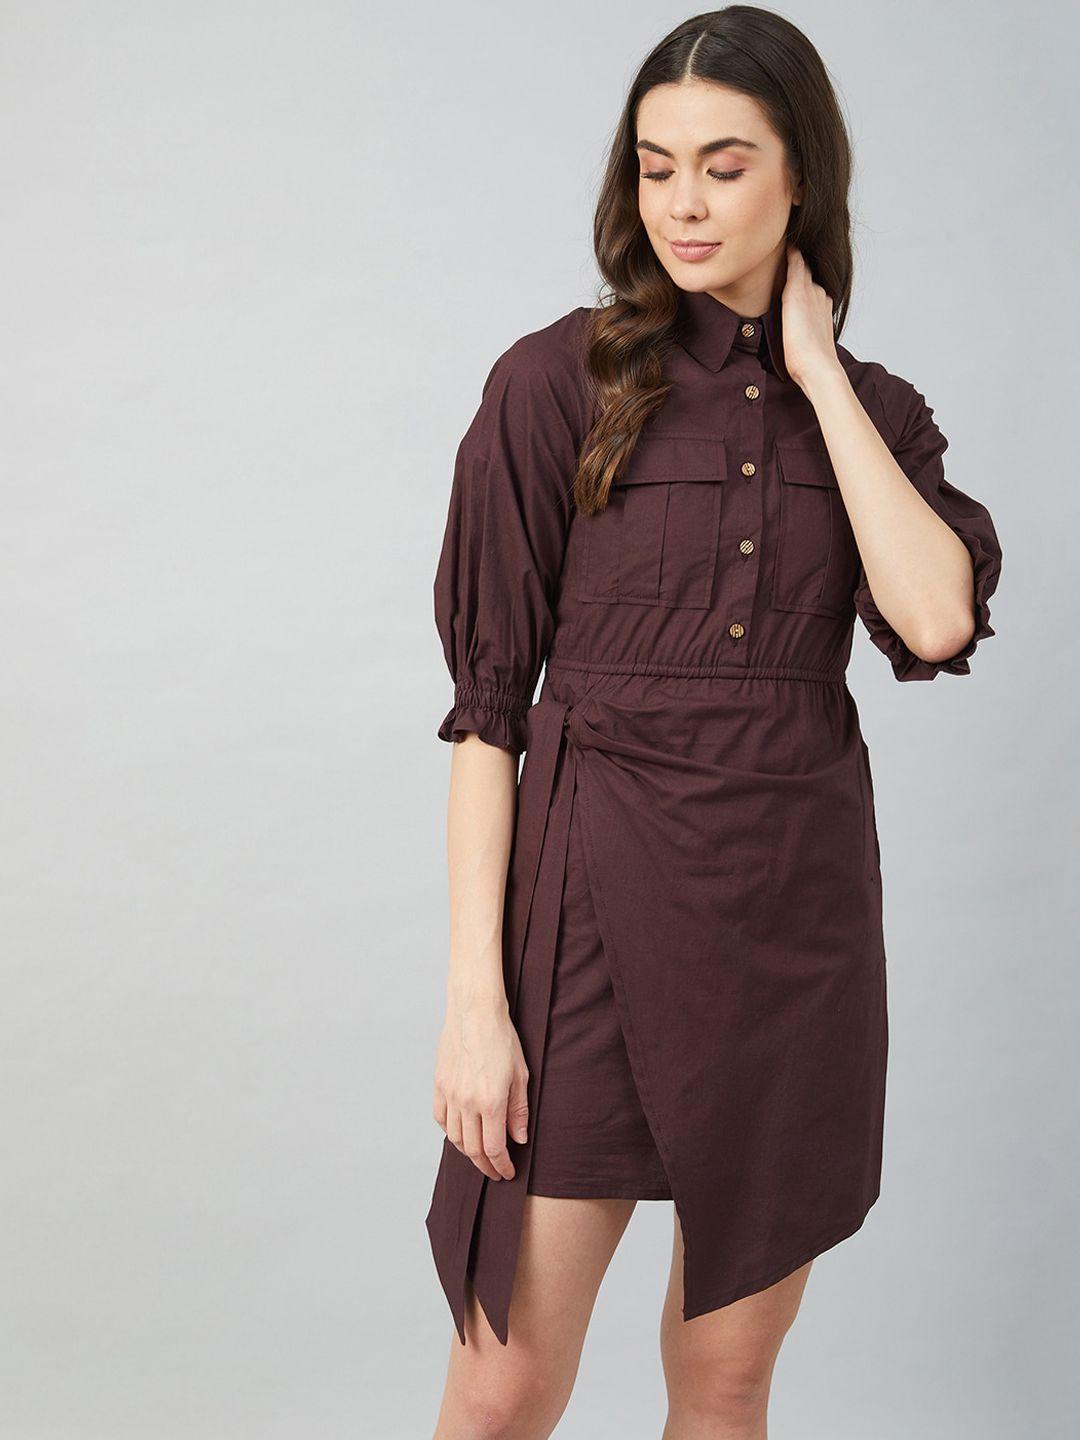 athena women brown cotton wrap dress with front pocket detail